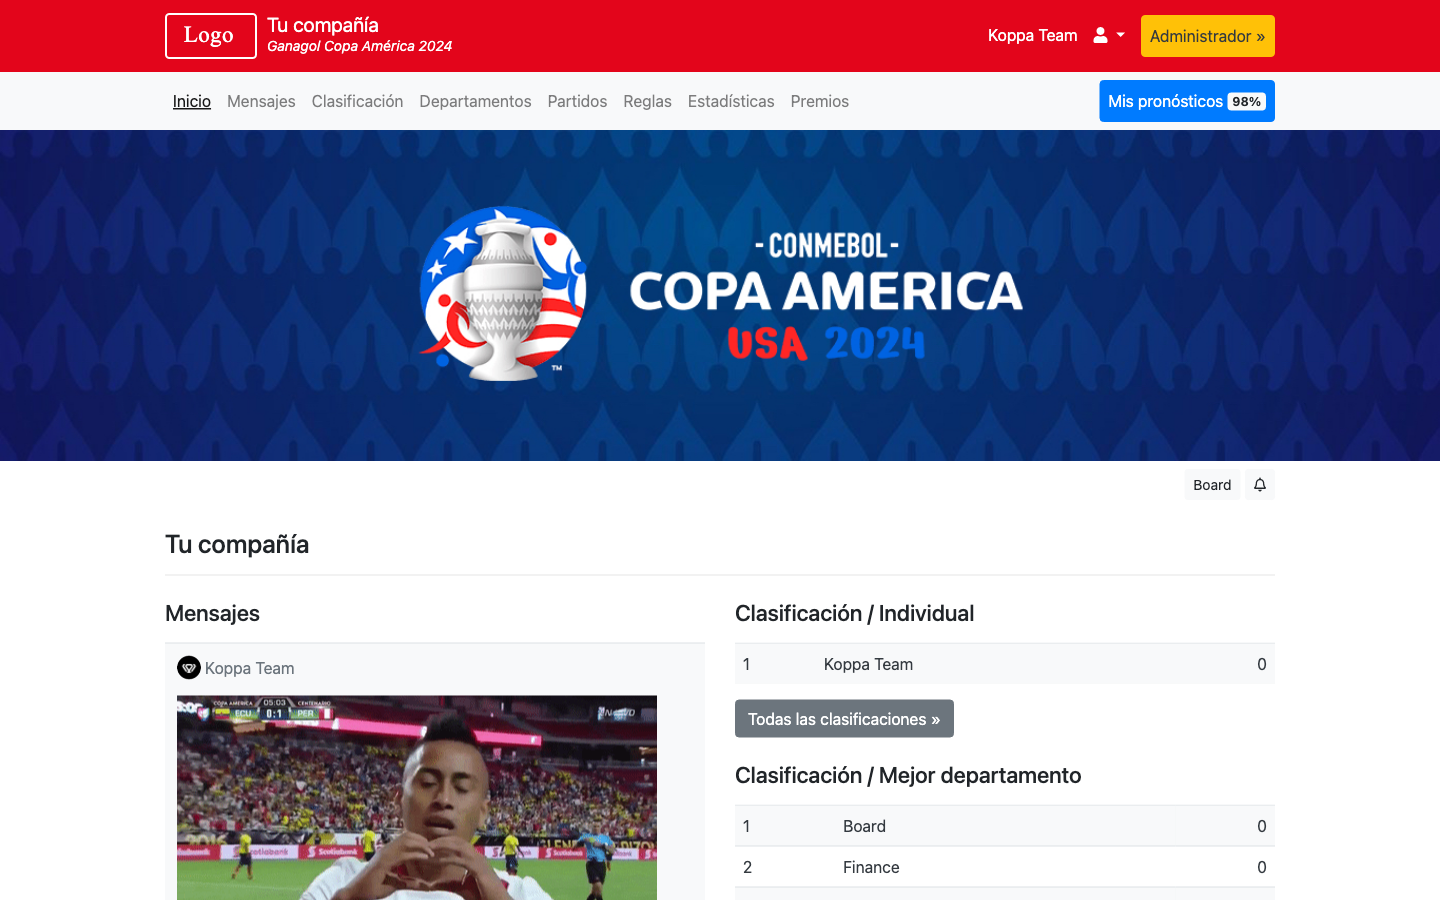 Ganagol Copa América 2024 - Copa América 2024